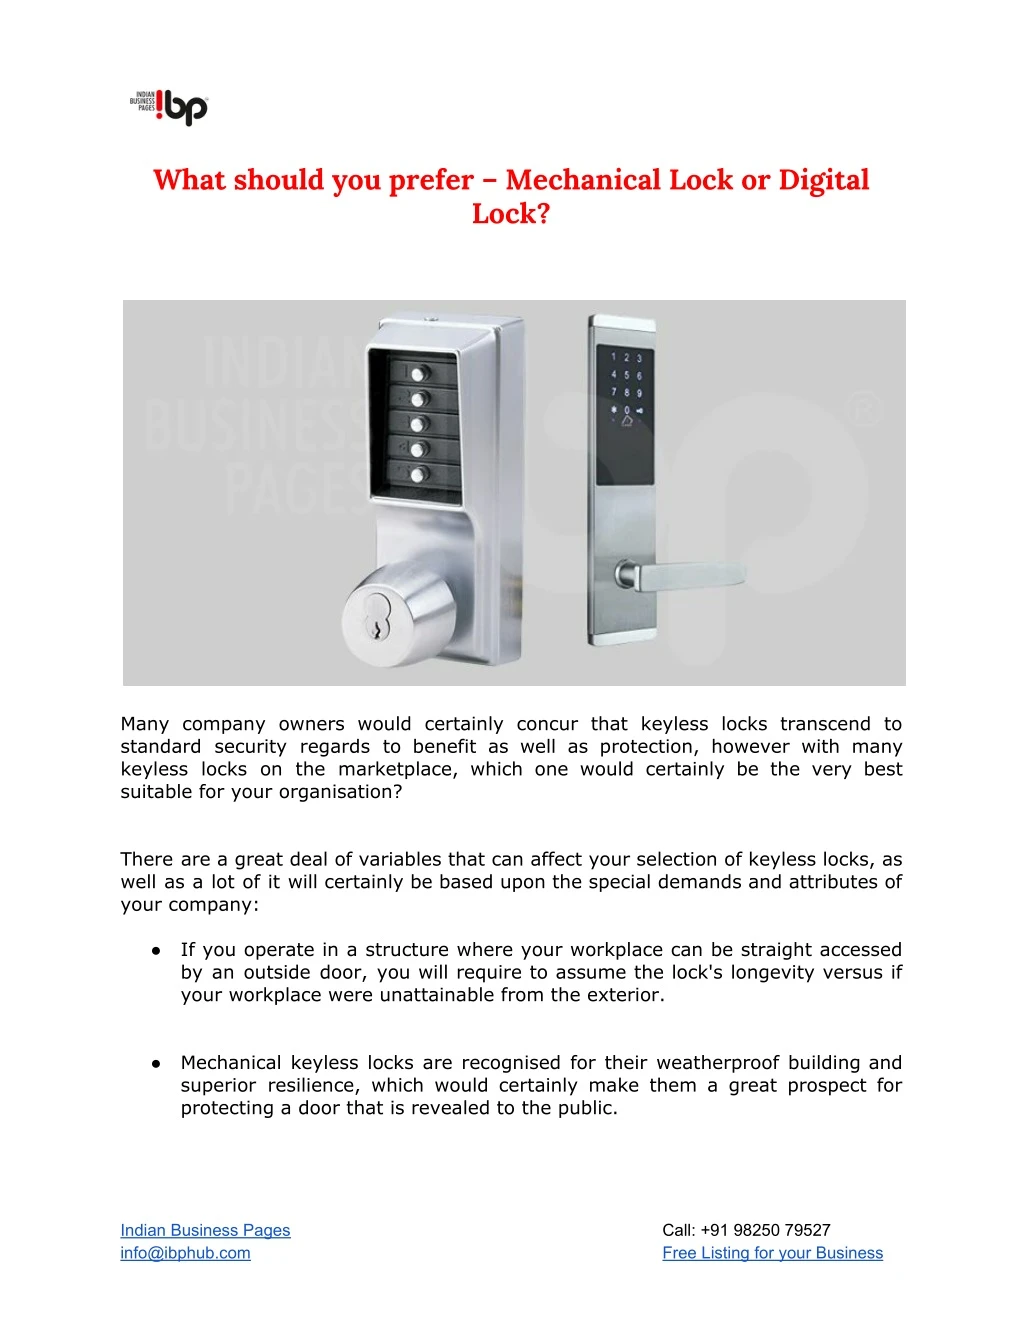 what should you prefer mechanical lock or digital